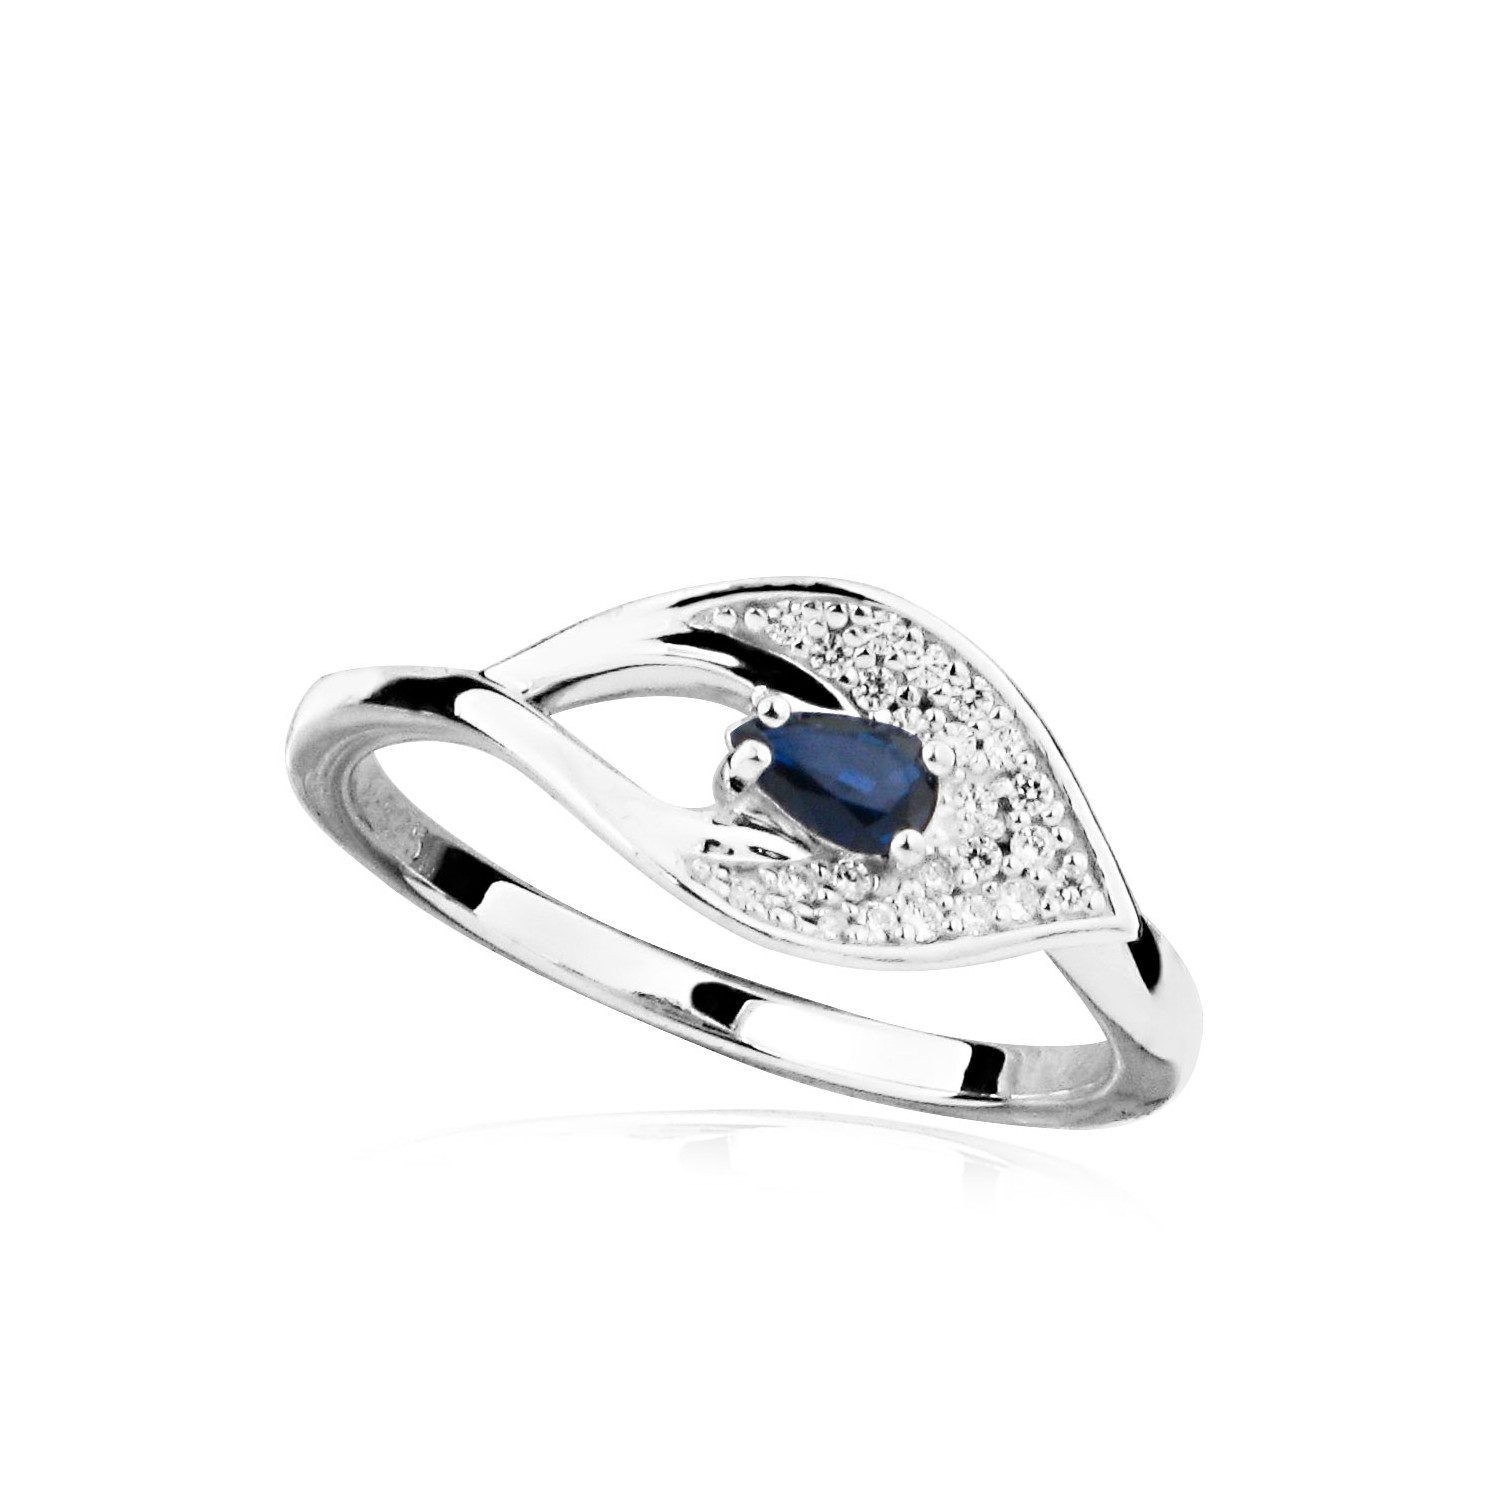 MOISS Moiss stříbrný prsten MARITA s MODRÝM SAFÍREM RG000057 Velikost 59 mm RG000059 + doprava ZDARMA